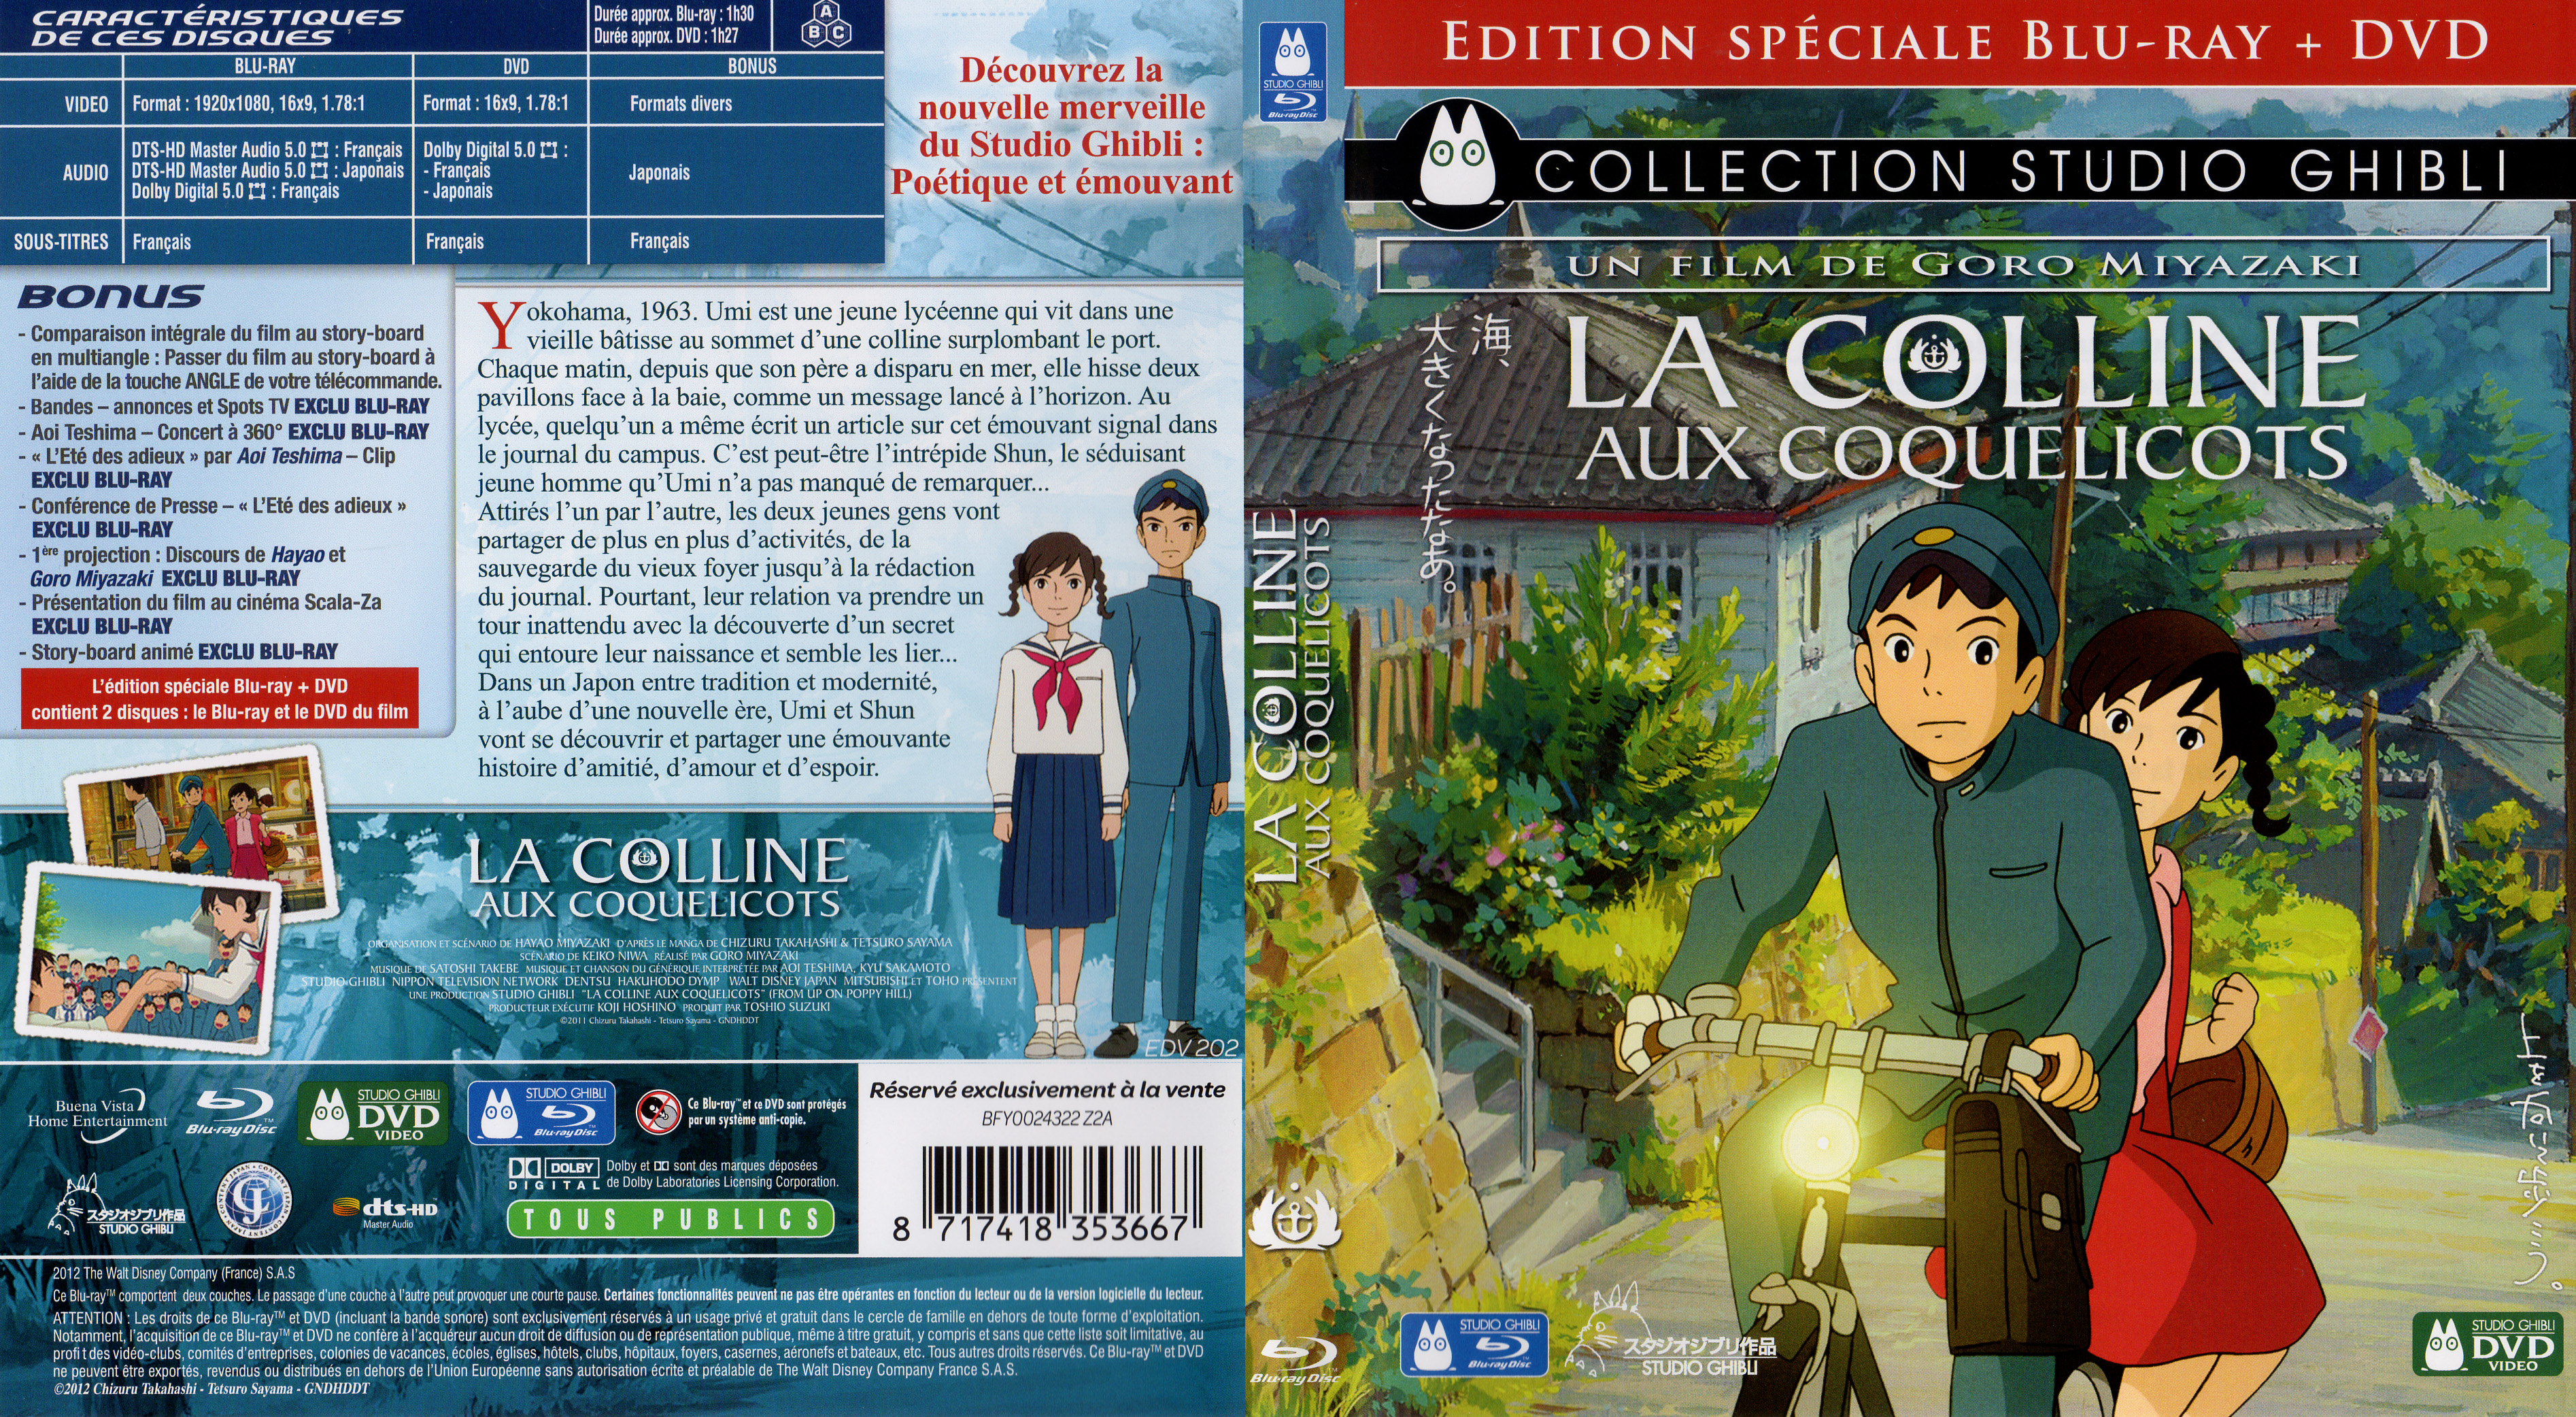 Jaquette DVD La colline aux coquelicots (BLU-RAY)